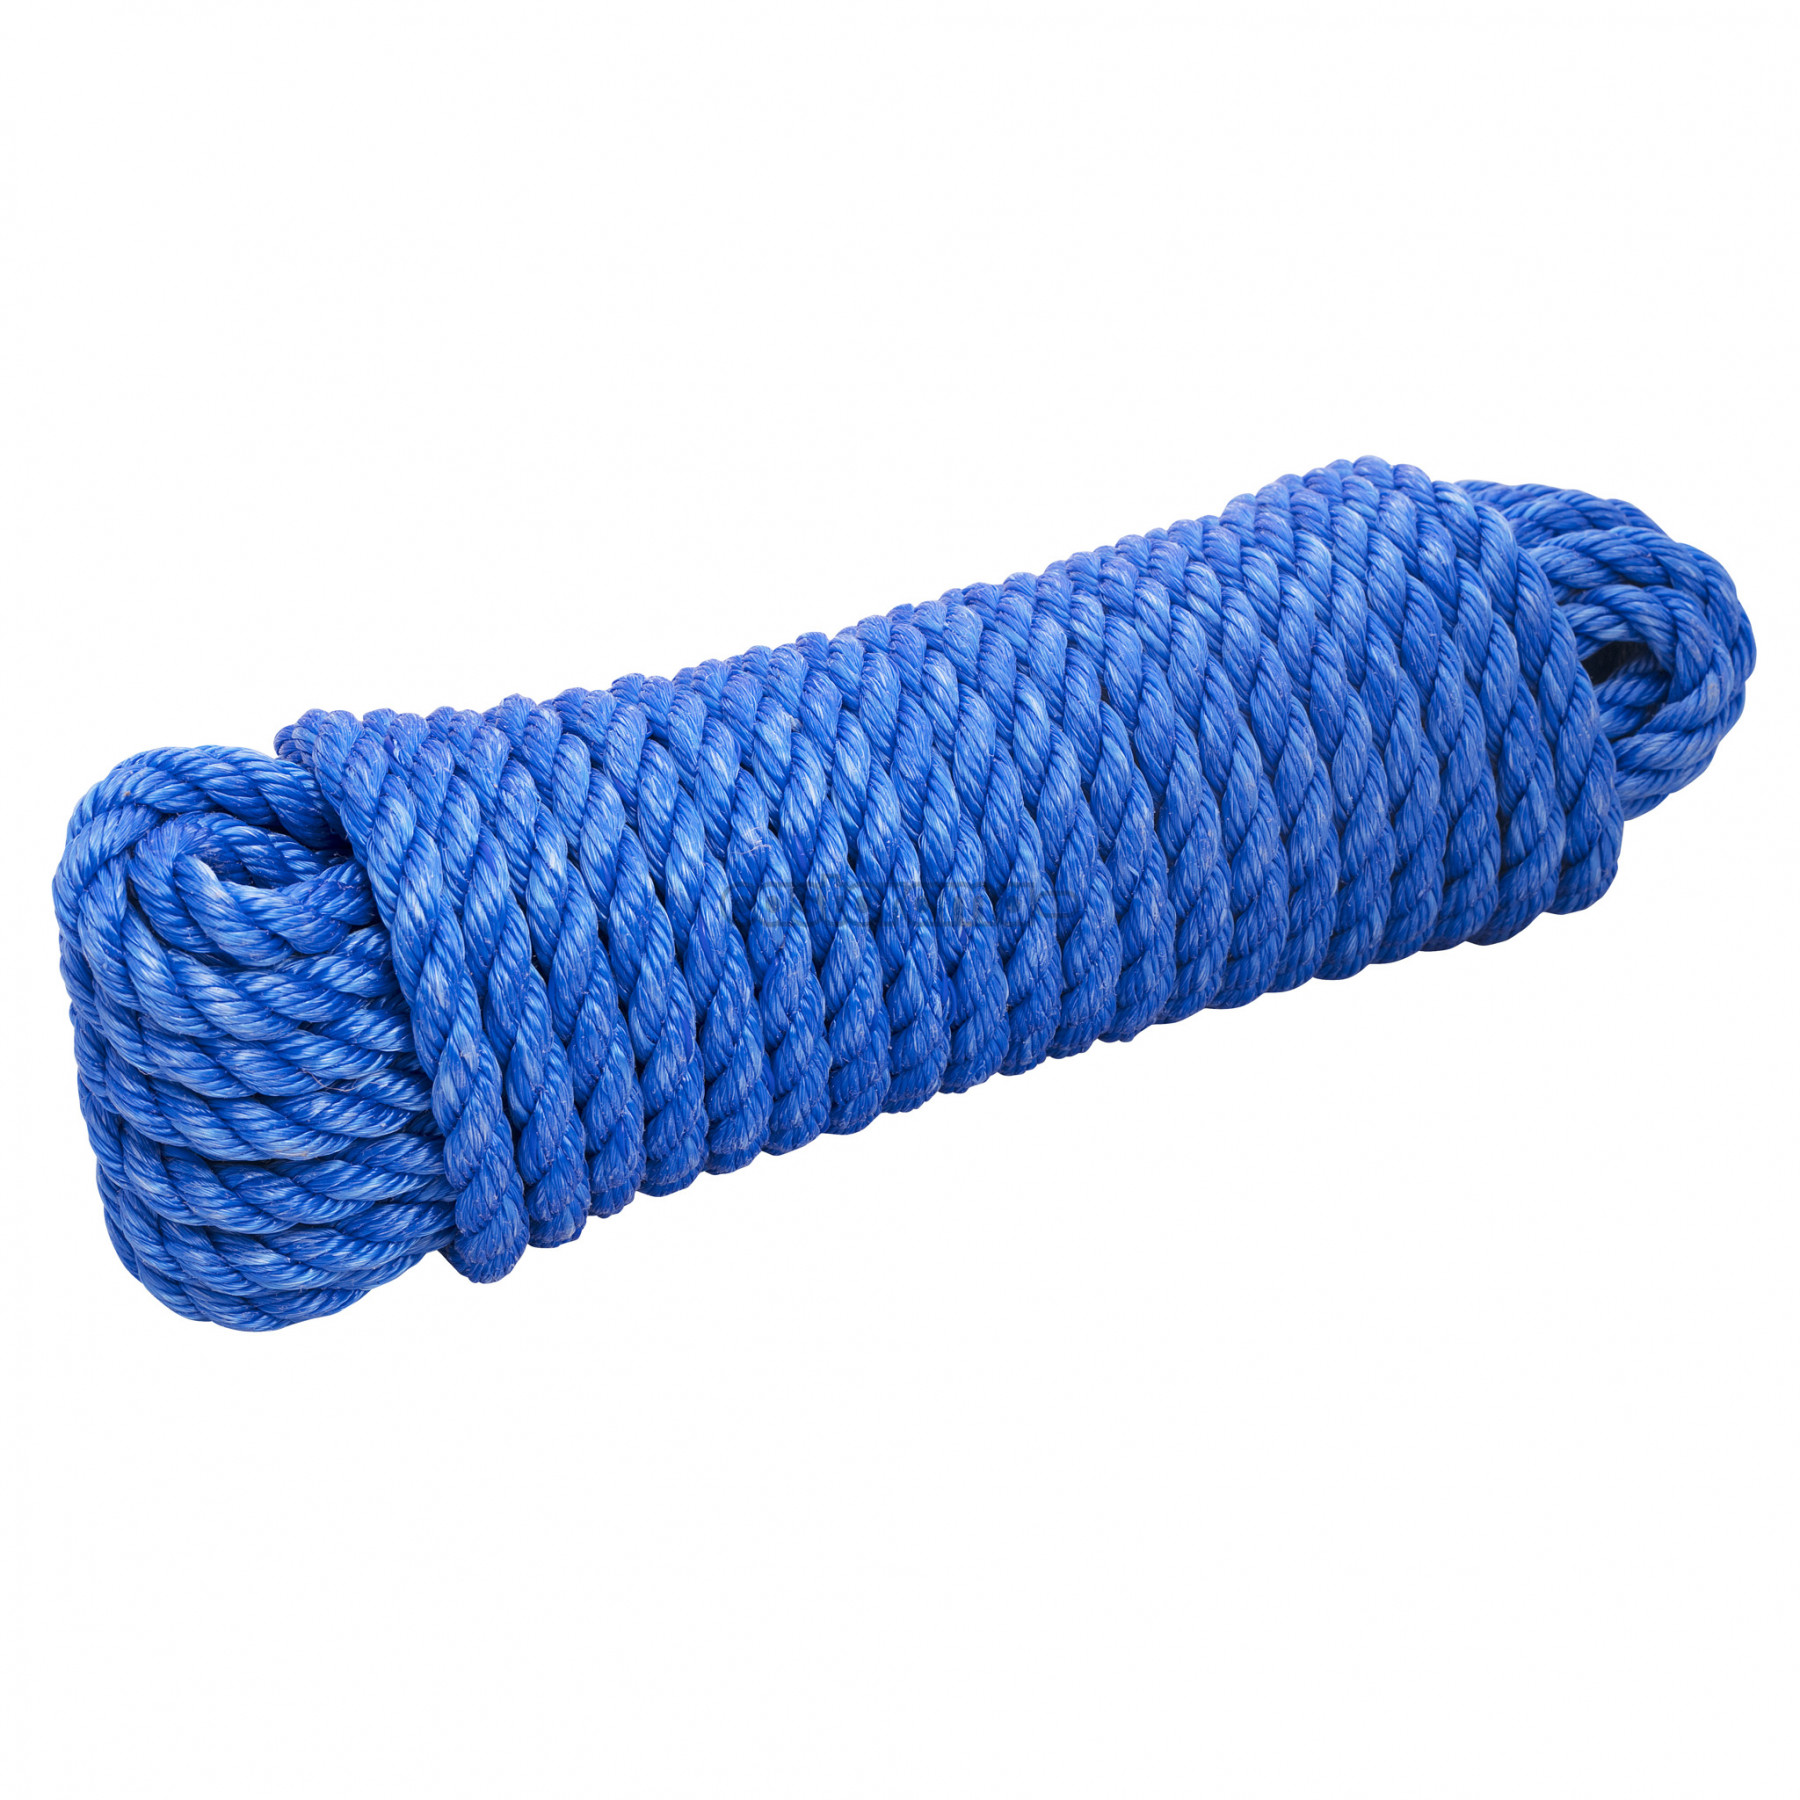 Шнур плетёный ШВАРТОВЫЙ 14,0 мм, синий, 2700 кг, 9 м